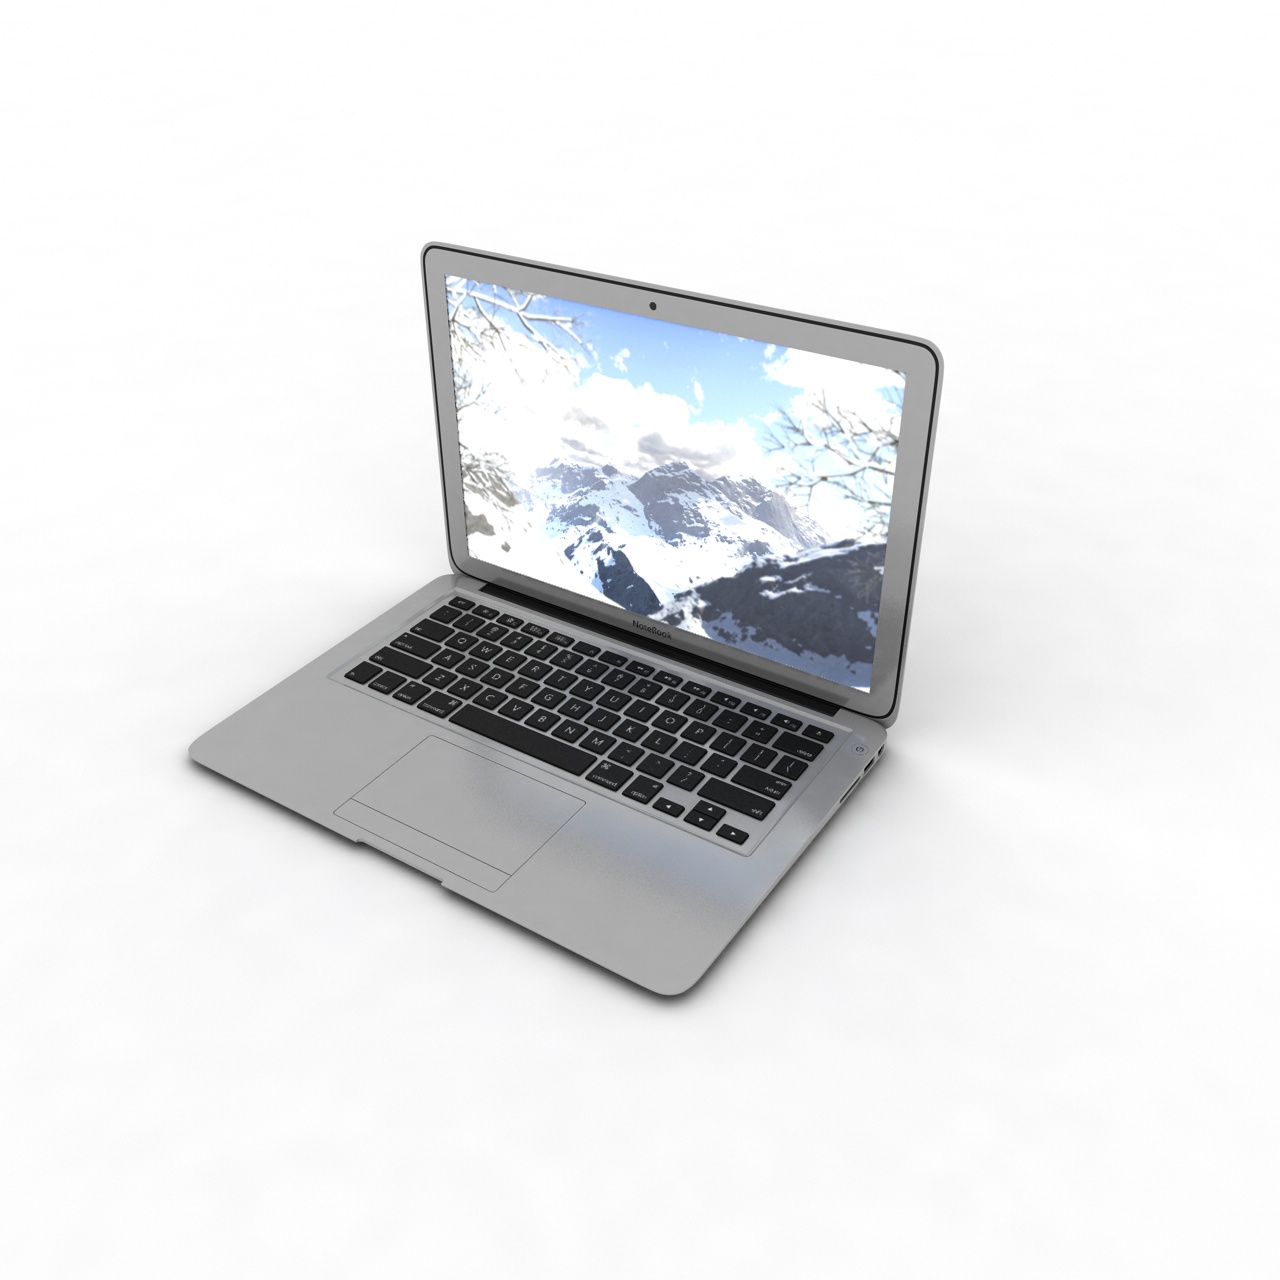 MacBook Air modelo 3d